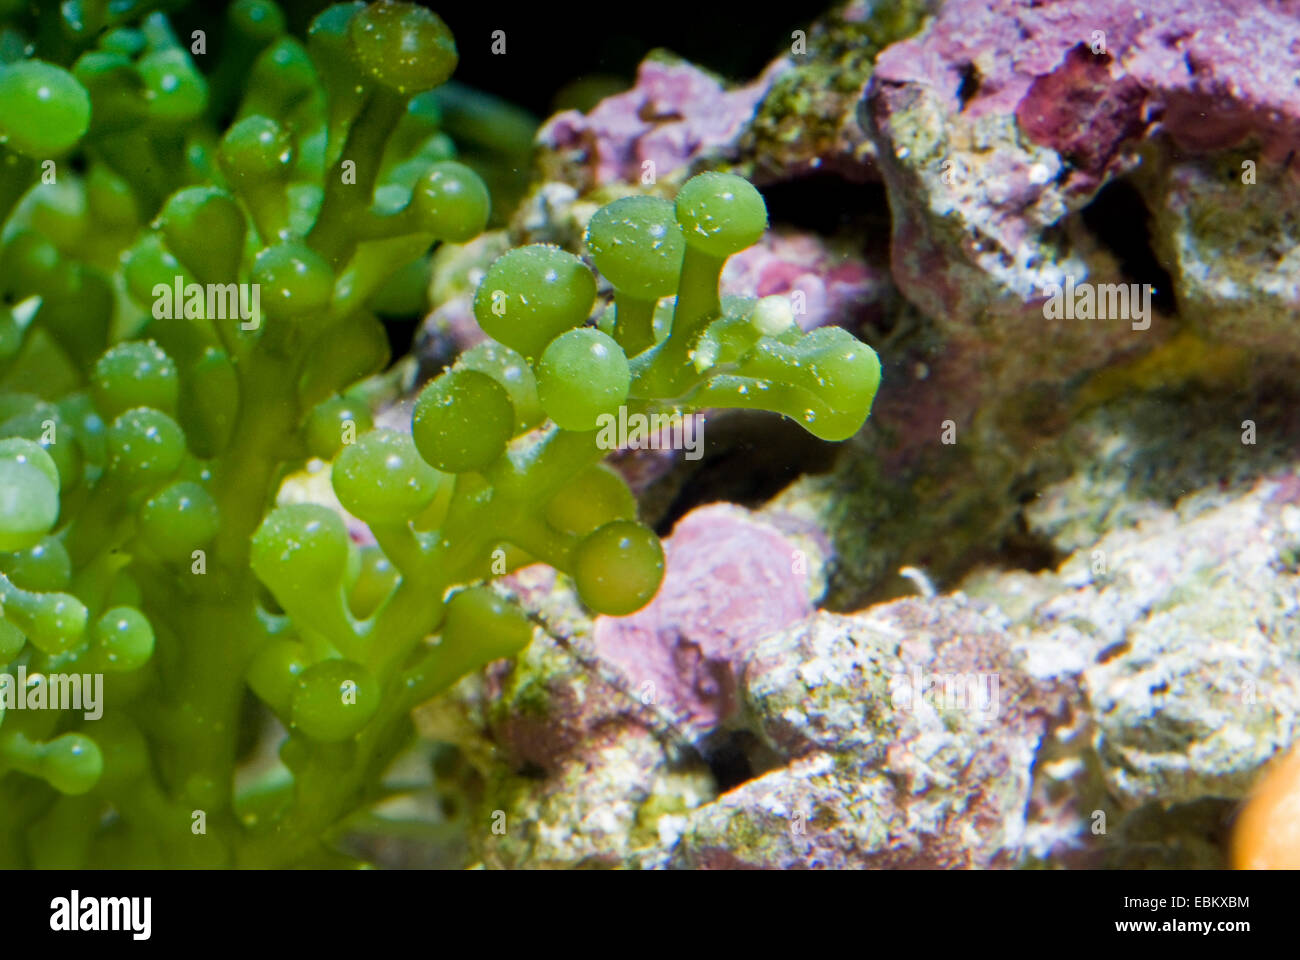 Grape Caulerpa Algae (Caulerpa racemosa), close-up view Stock Photo